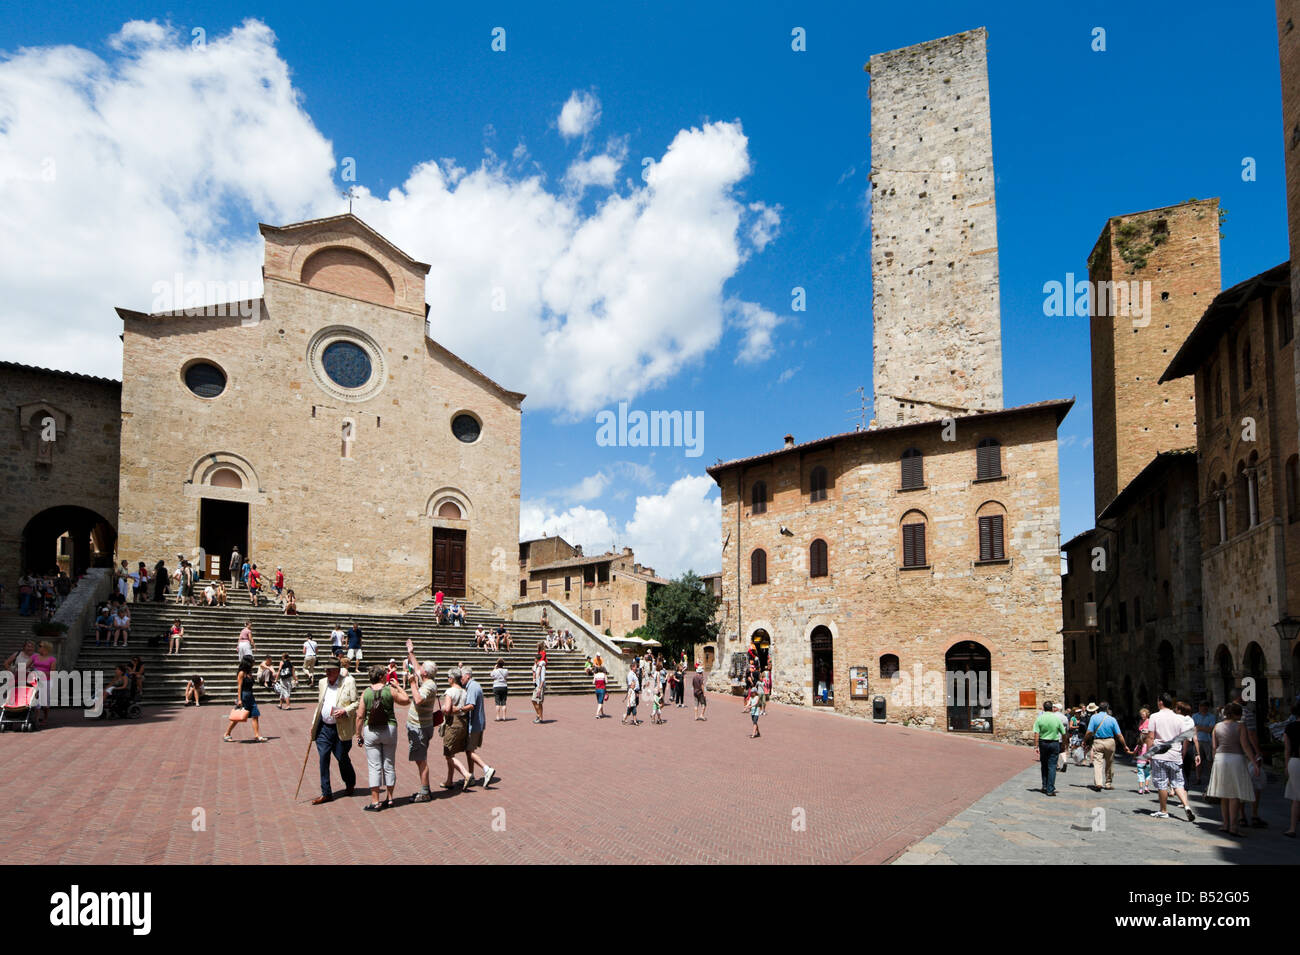 La Collegiata (Duomo) et tours historiques de la Piazza del Duomo, San Gimignano, Toscane, Italie Banque D'Images